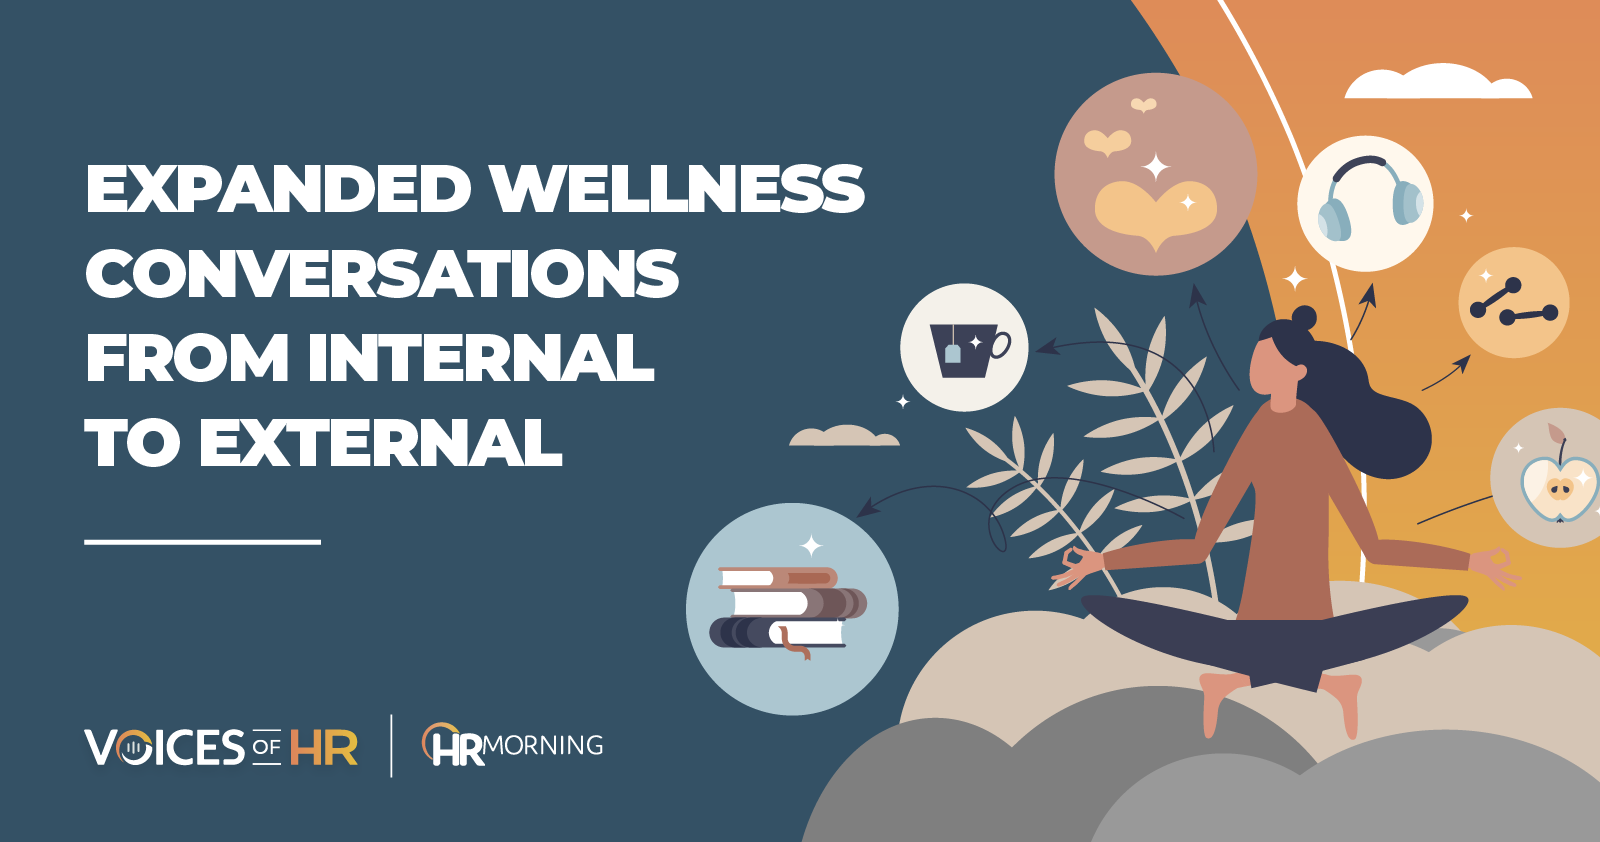 Expanded wellness conversations from internal to external